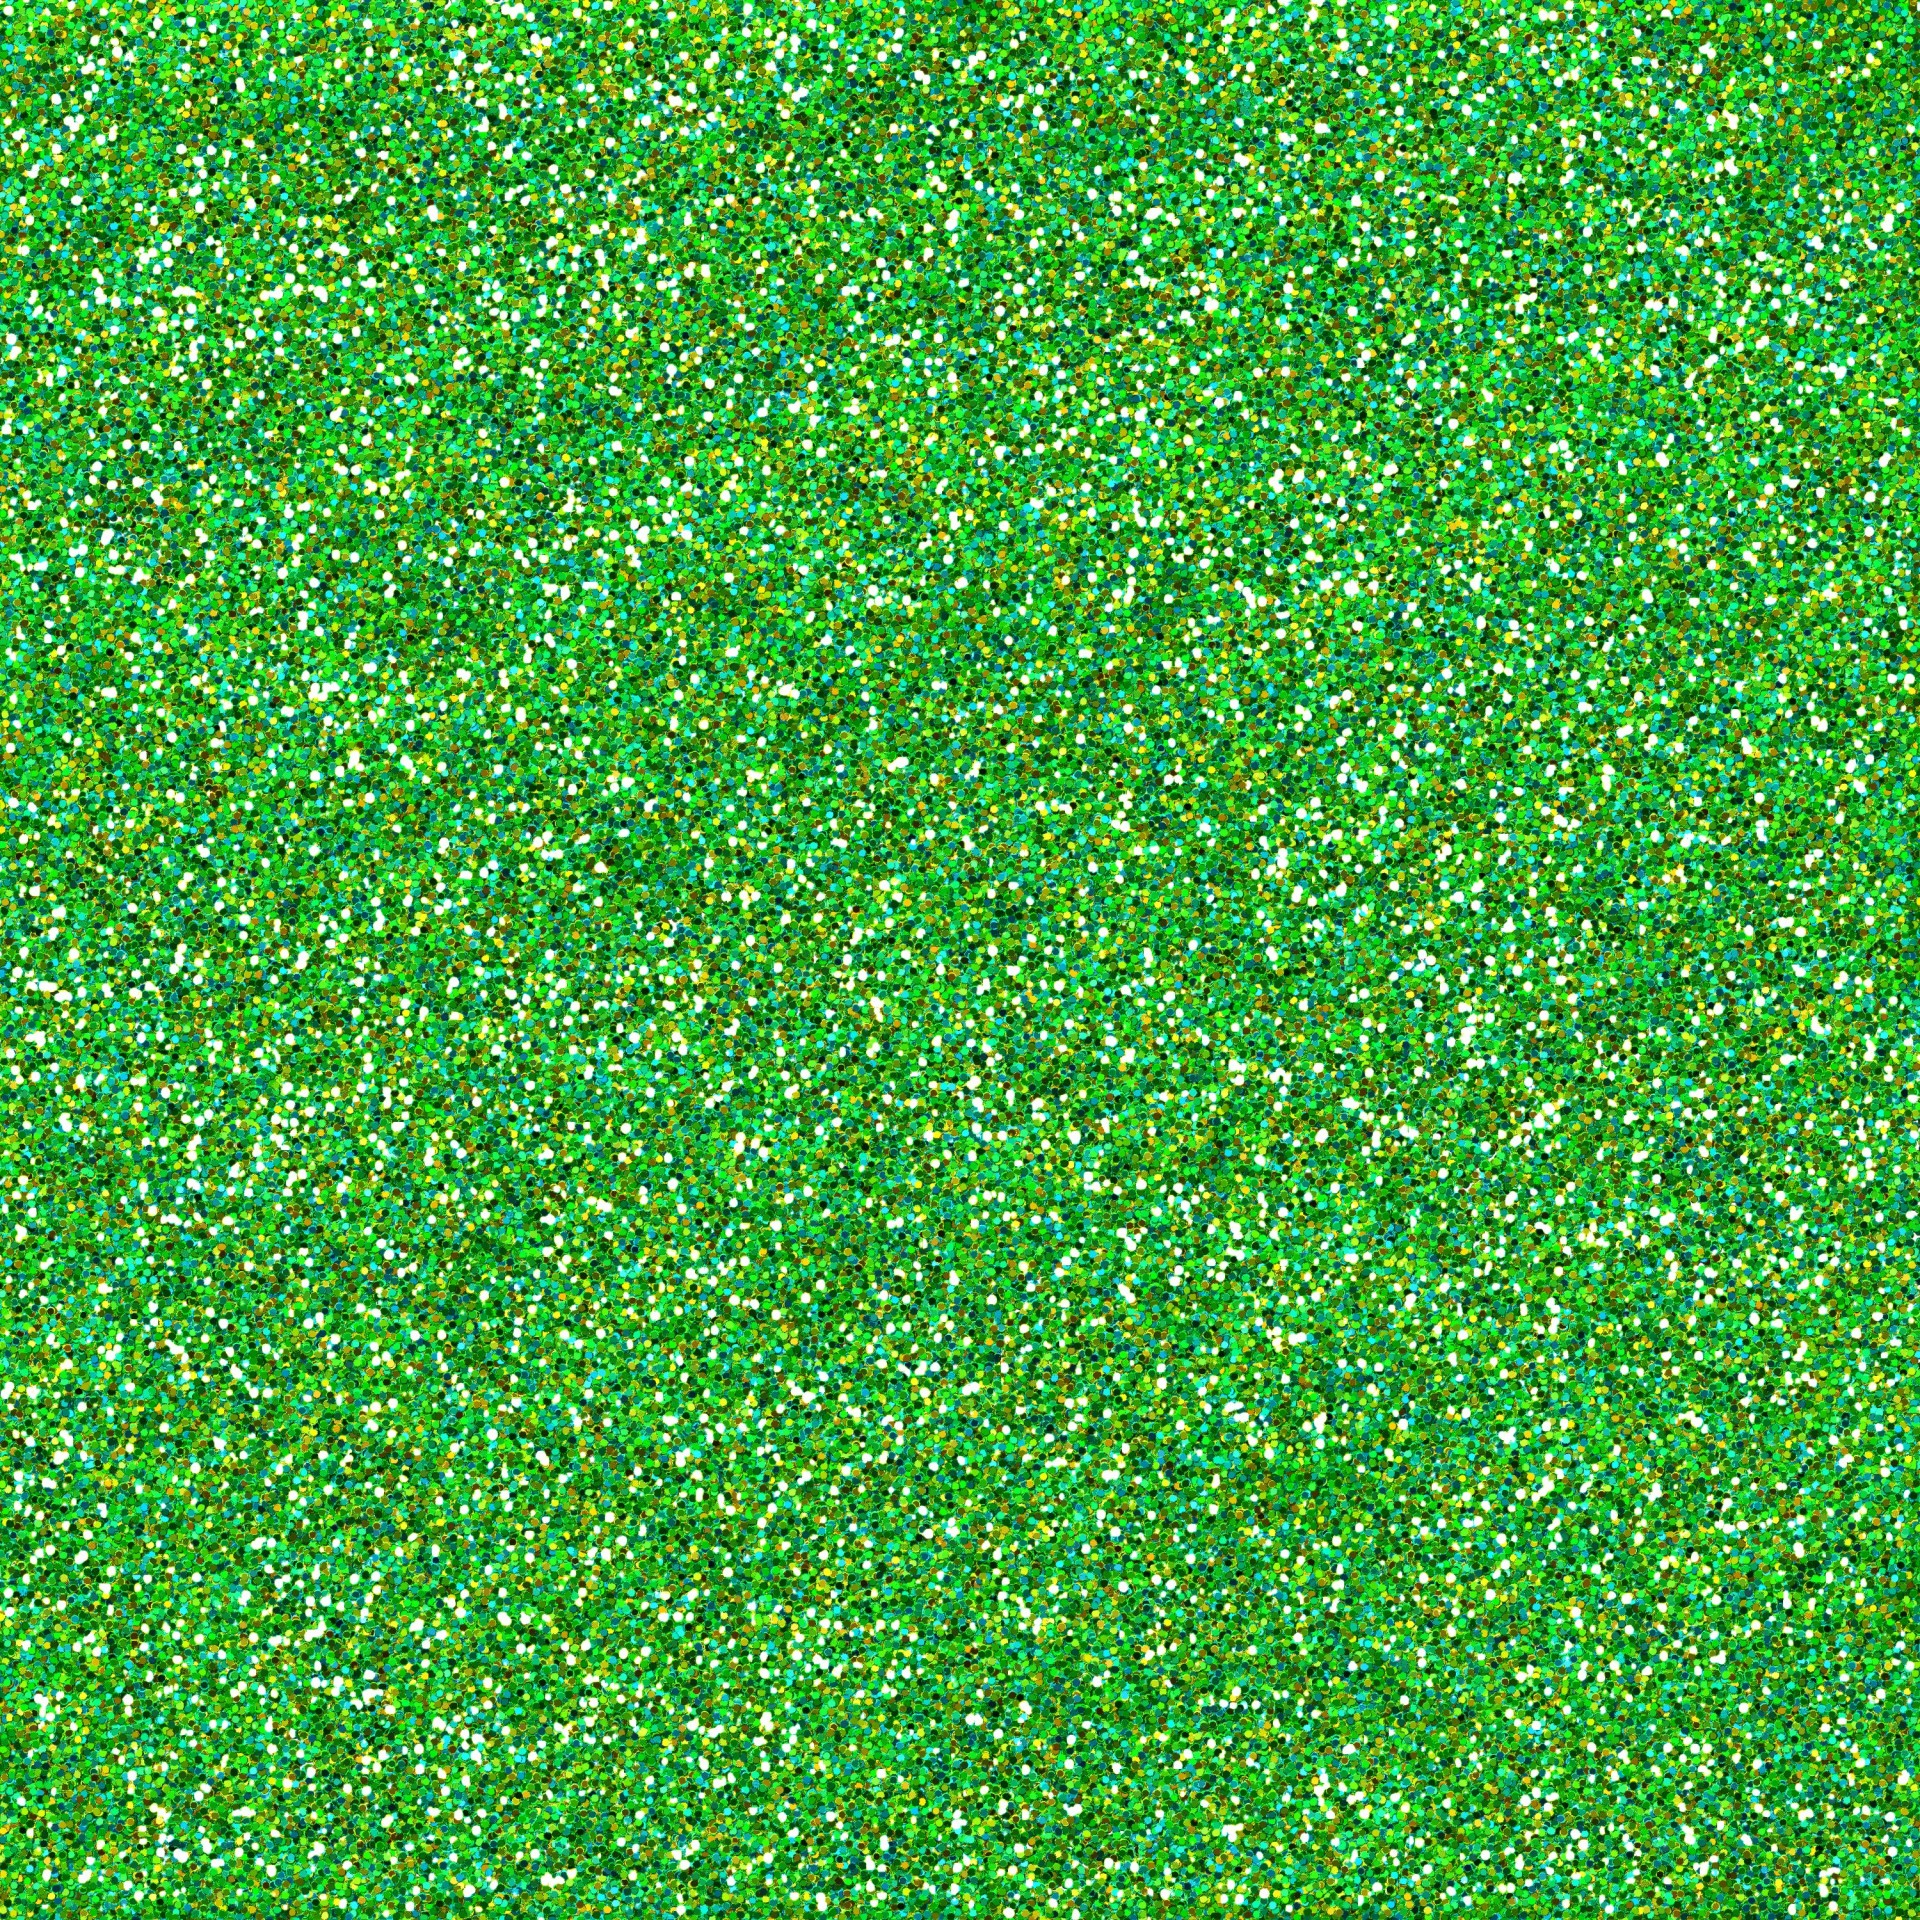 Digitally created metallic green glitter background texture.